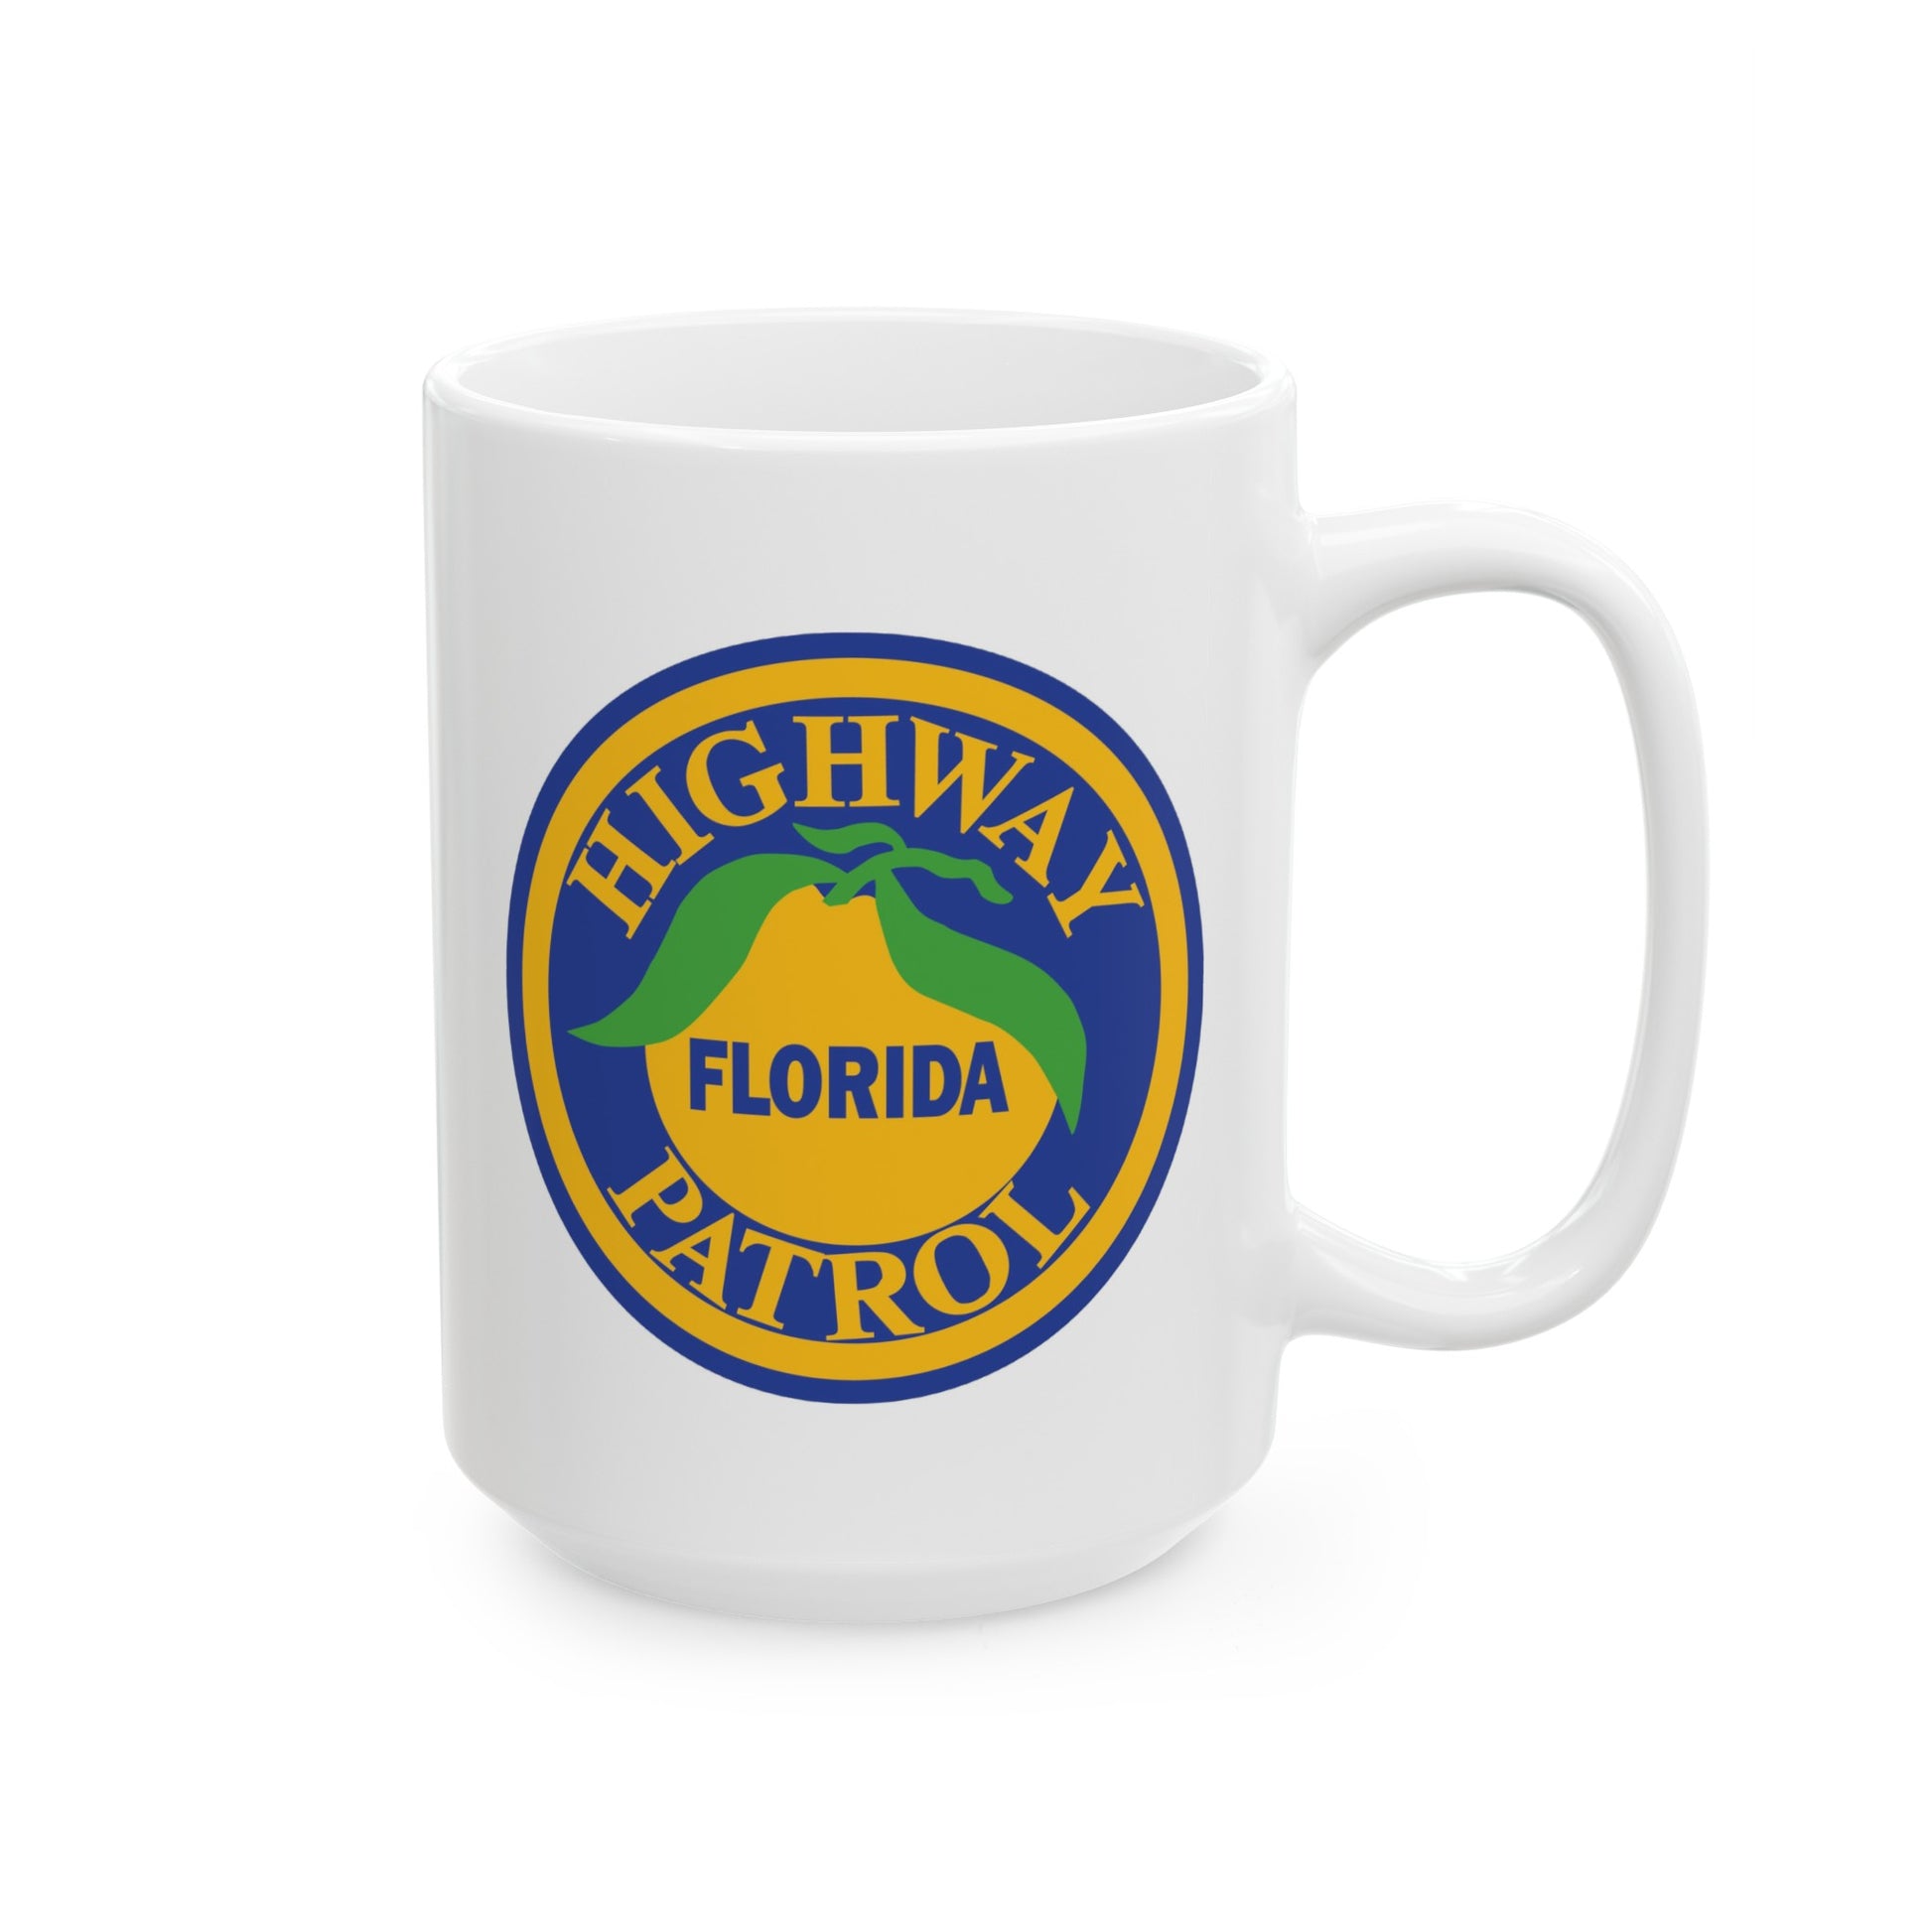 Florida Highway Patrol Coffee Mug - Double Sided White Ceramic 15oz by TheGlassyLass.com